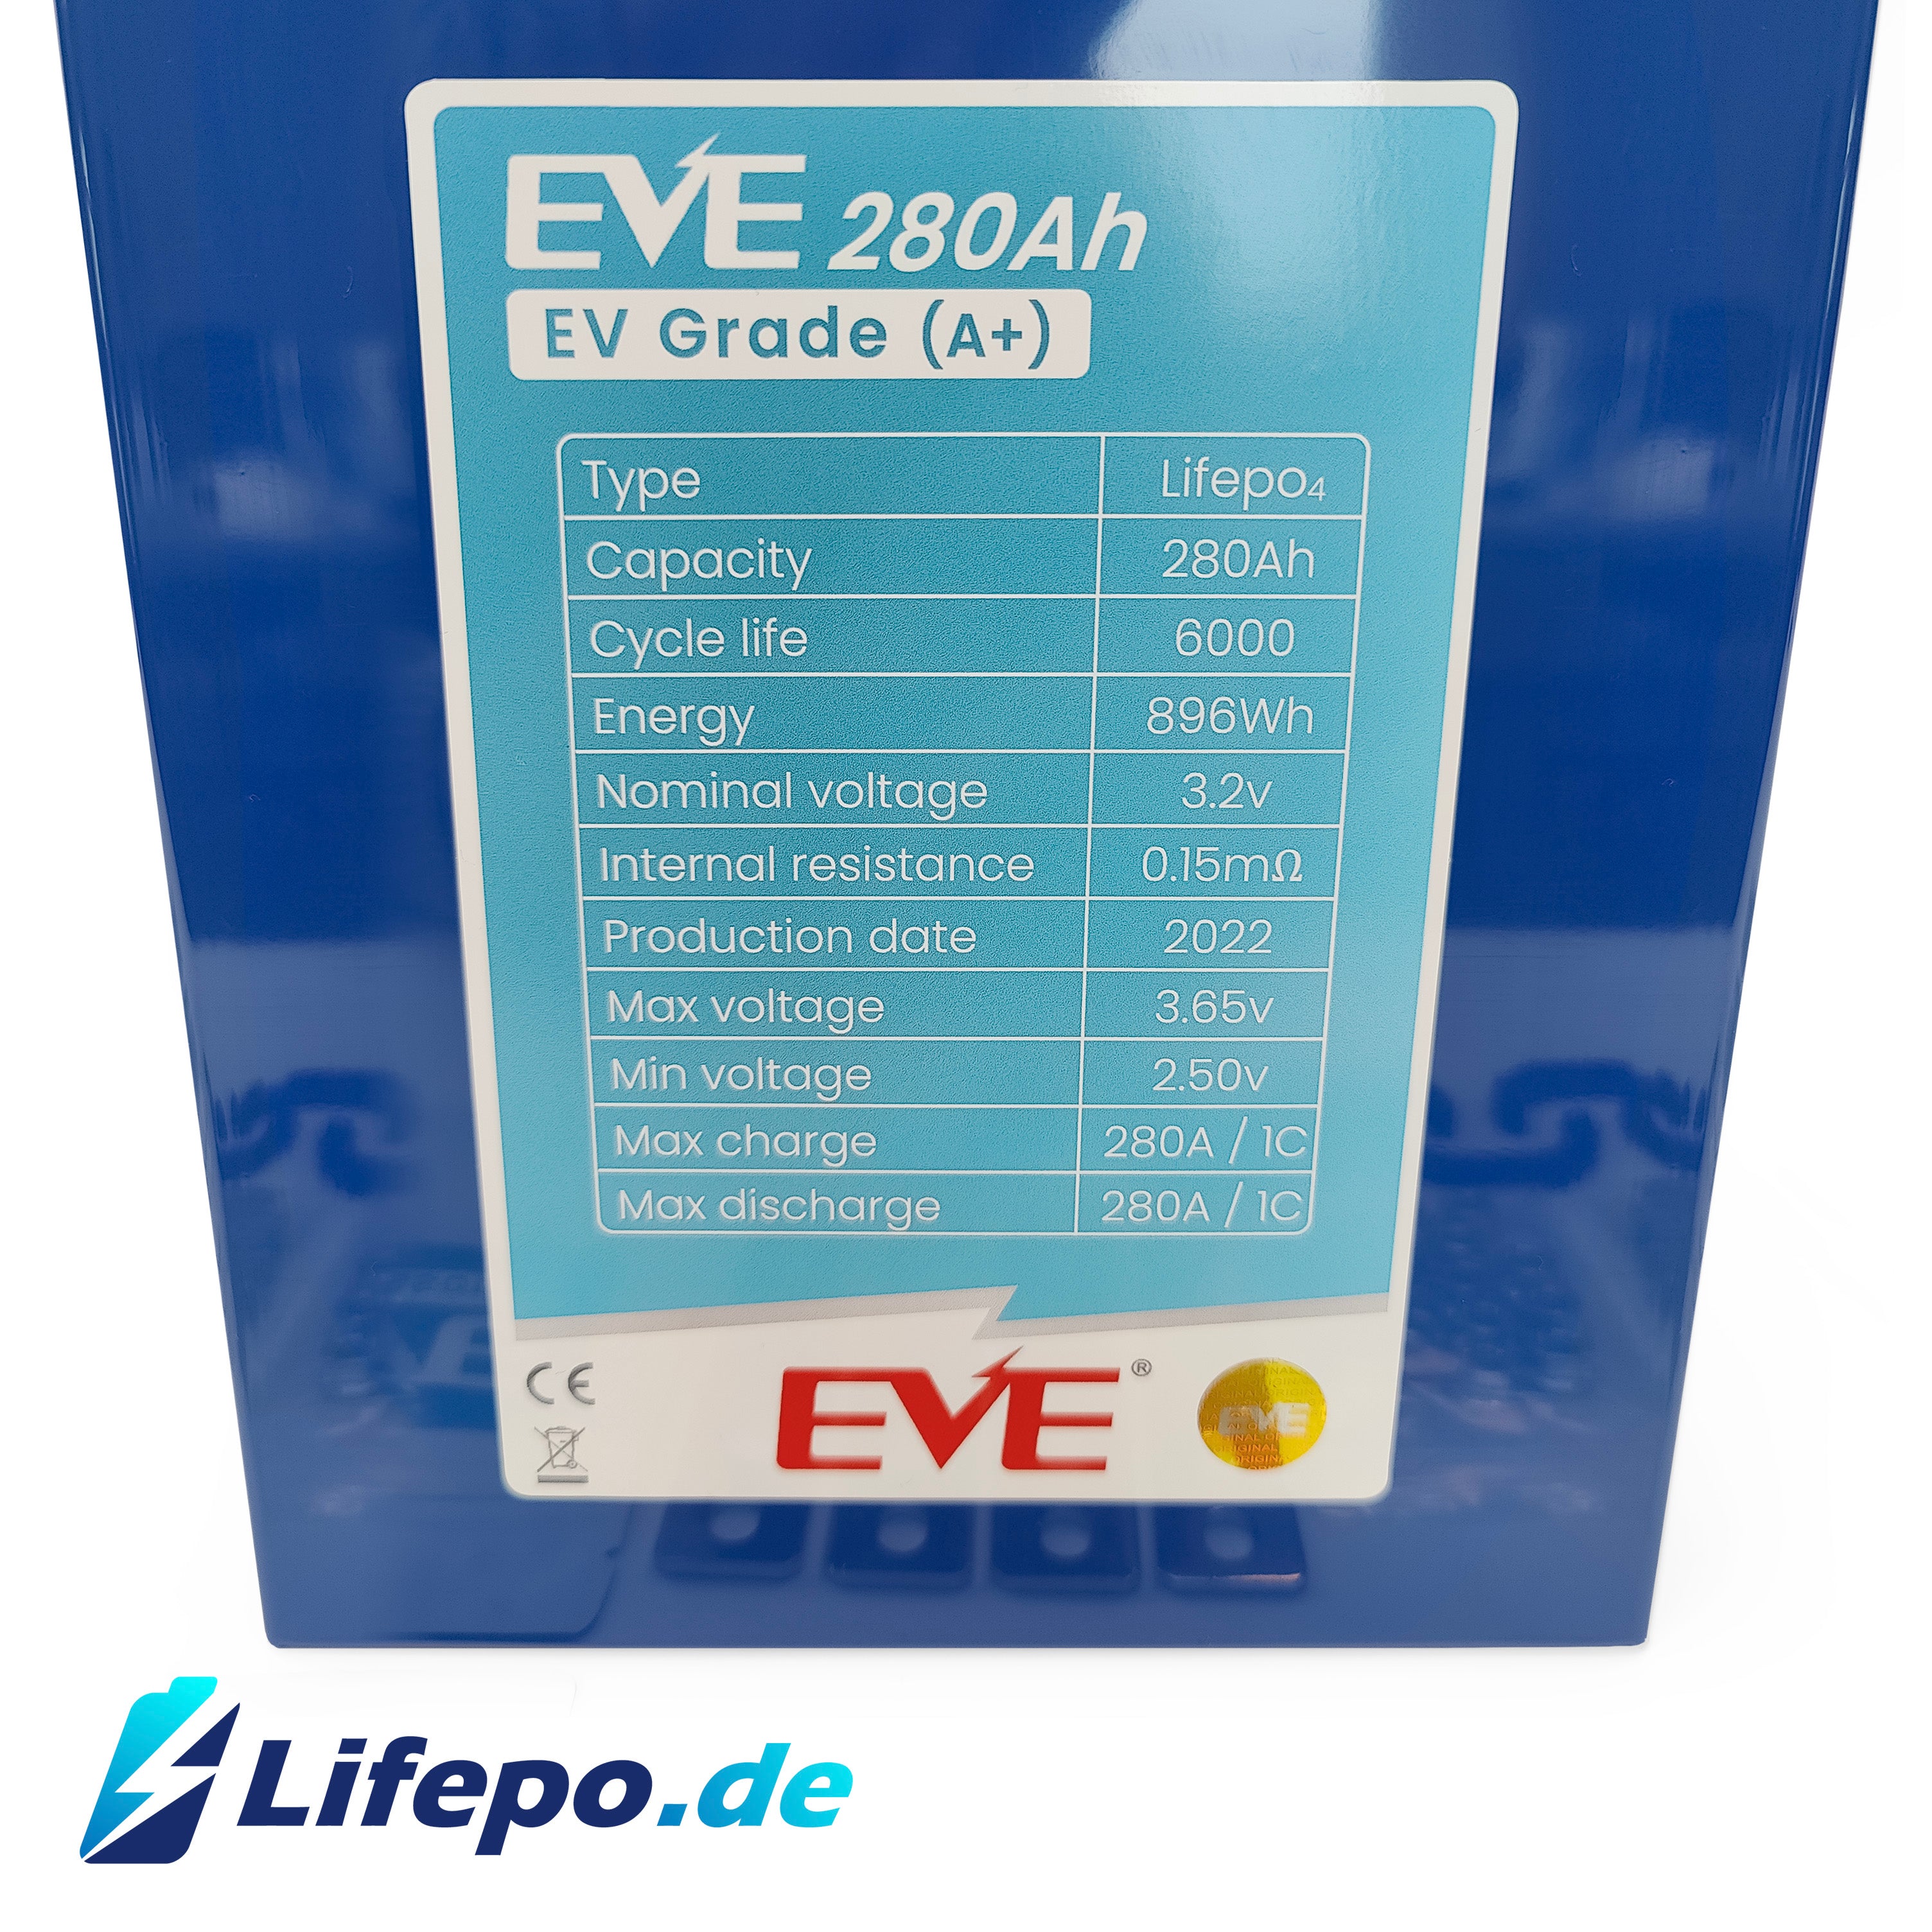 48v 280Ah - EVE - EV Grade (A+) - 14336Wh - 6000 cycles - Lifepo4 cells